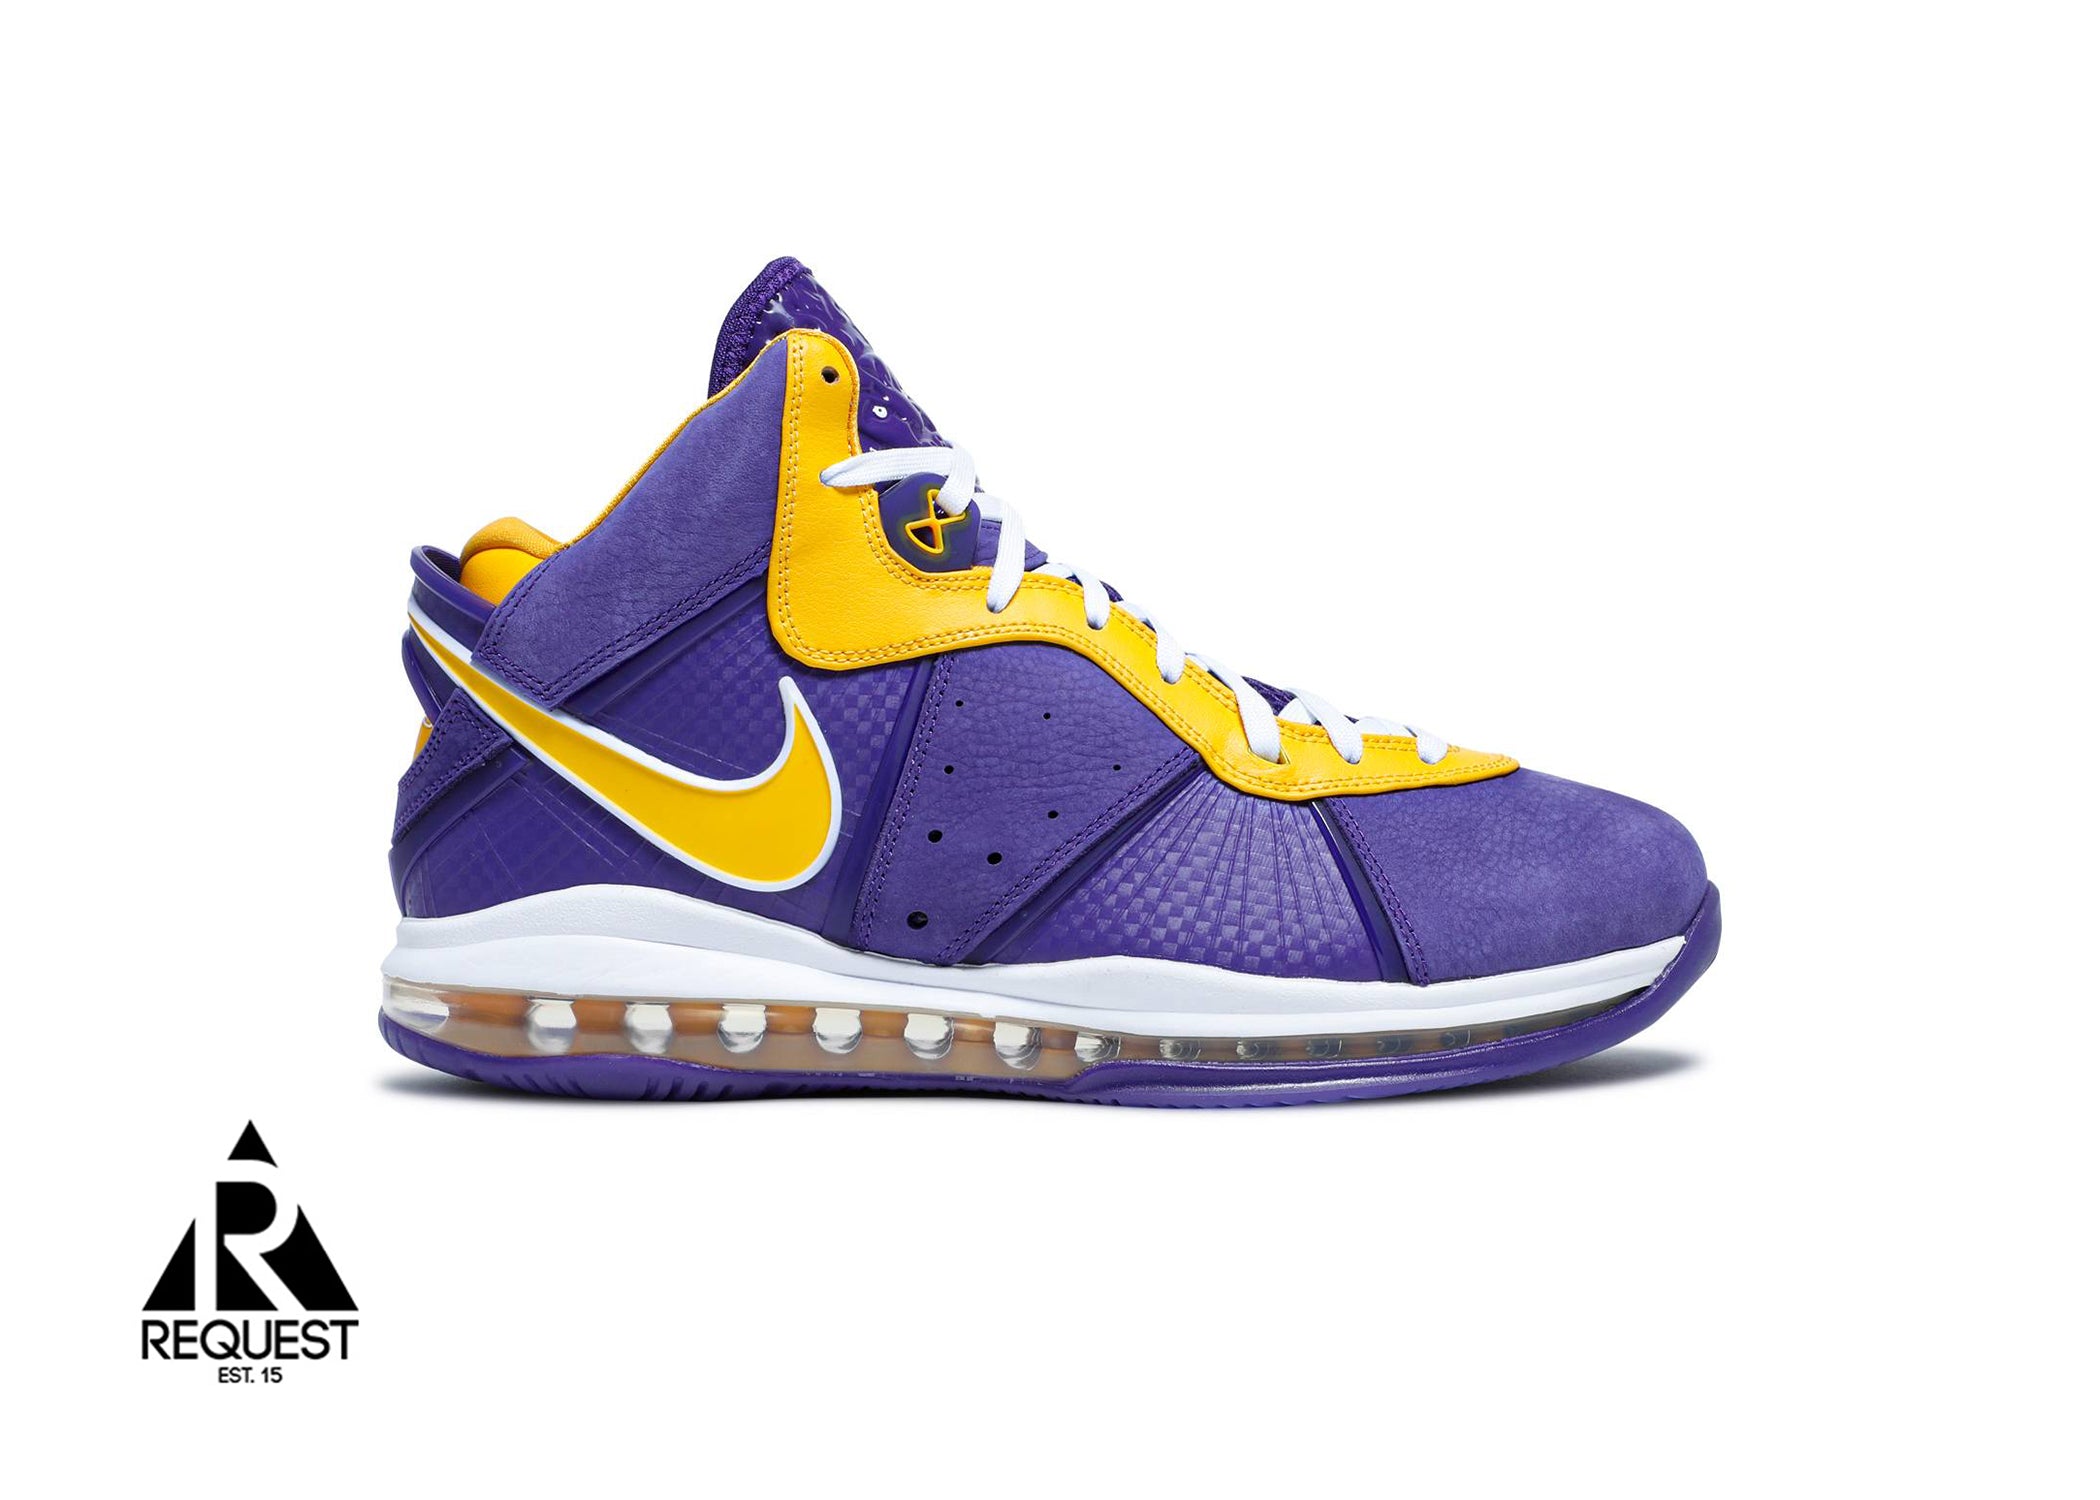 Nike LeBron 8 “Lakers”